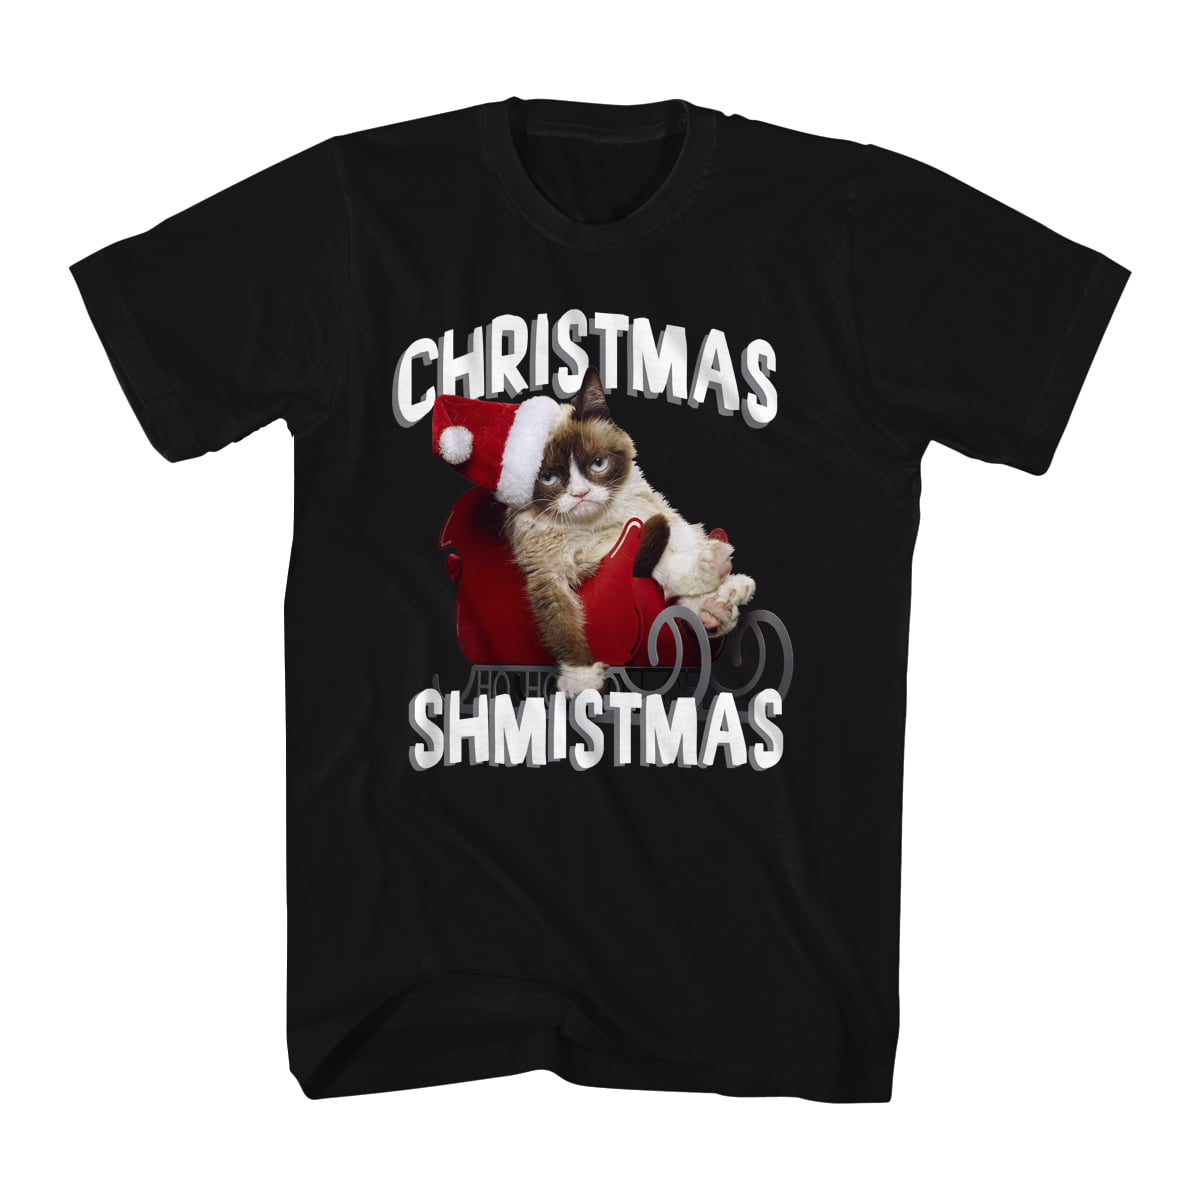 Grumpy Cat - Grumpy Cat Christmas Shmistmas Men's Black T-shirt NEW ...